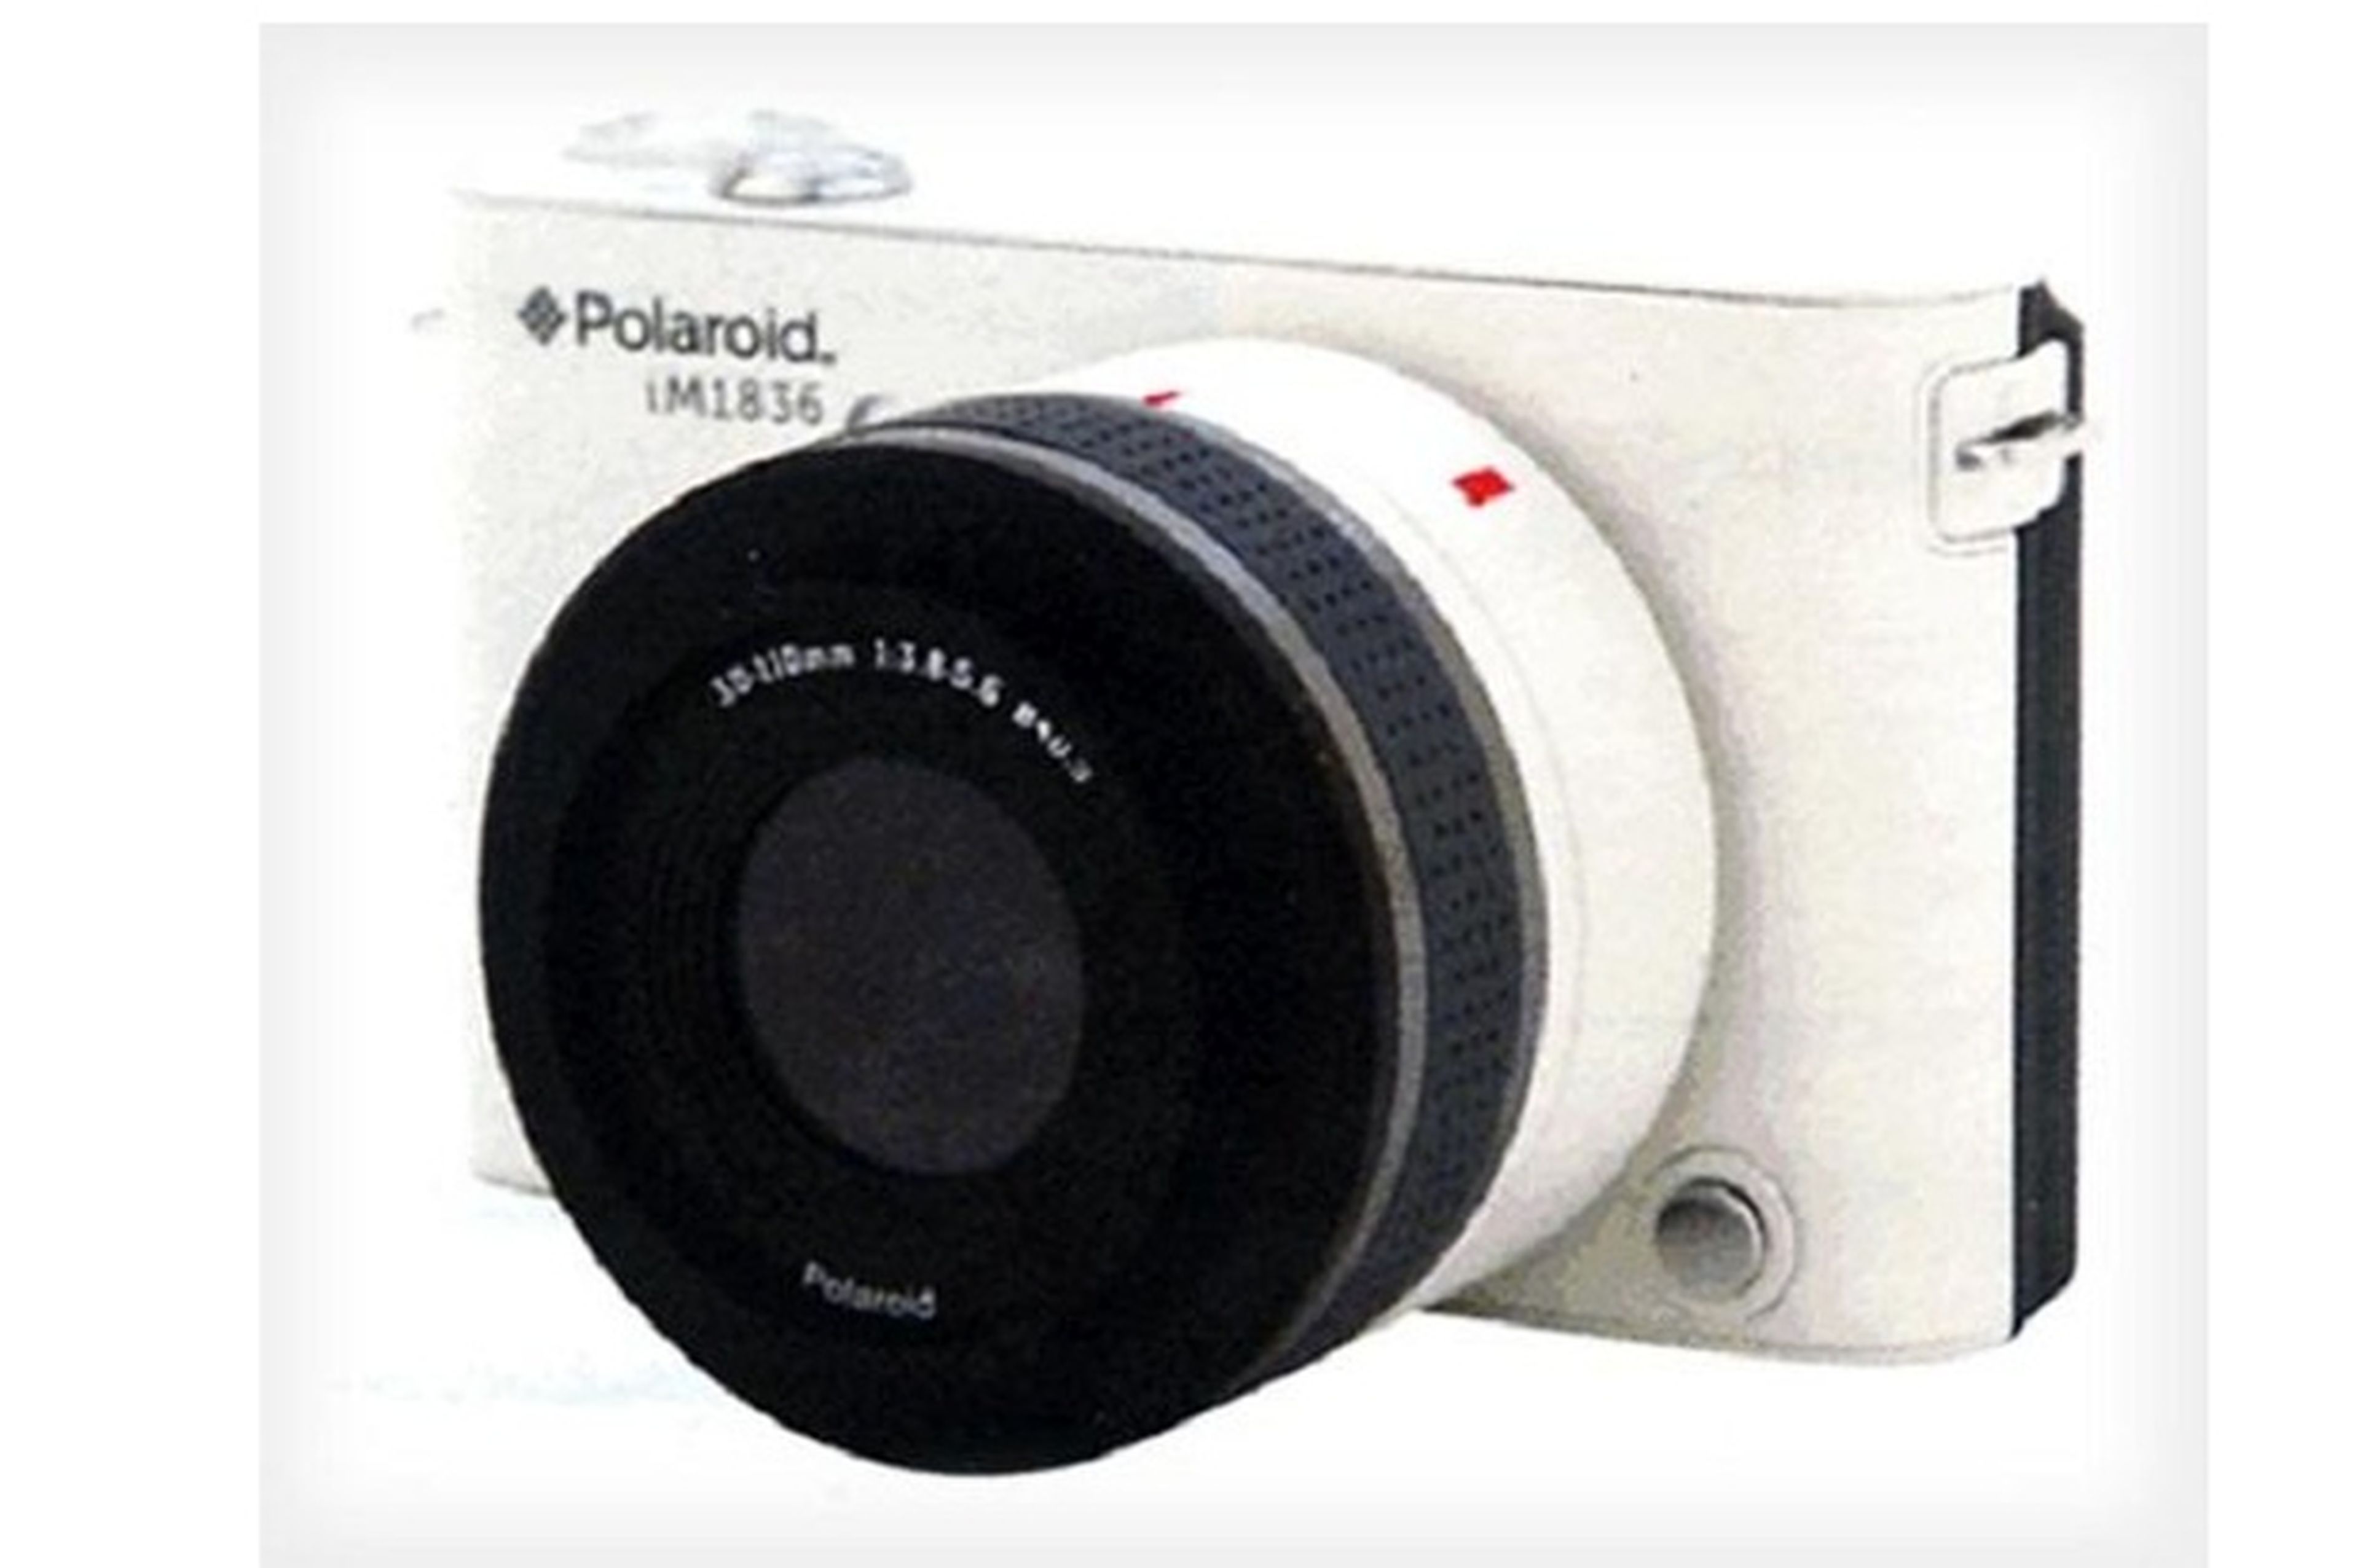 Polaroid IM1836